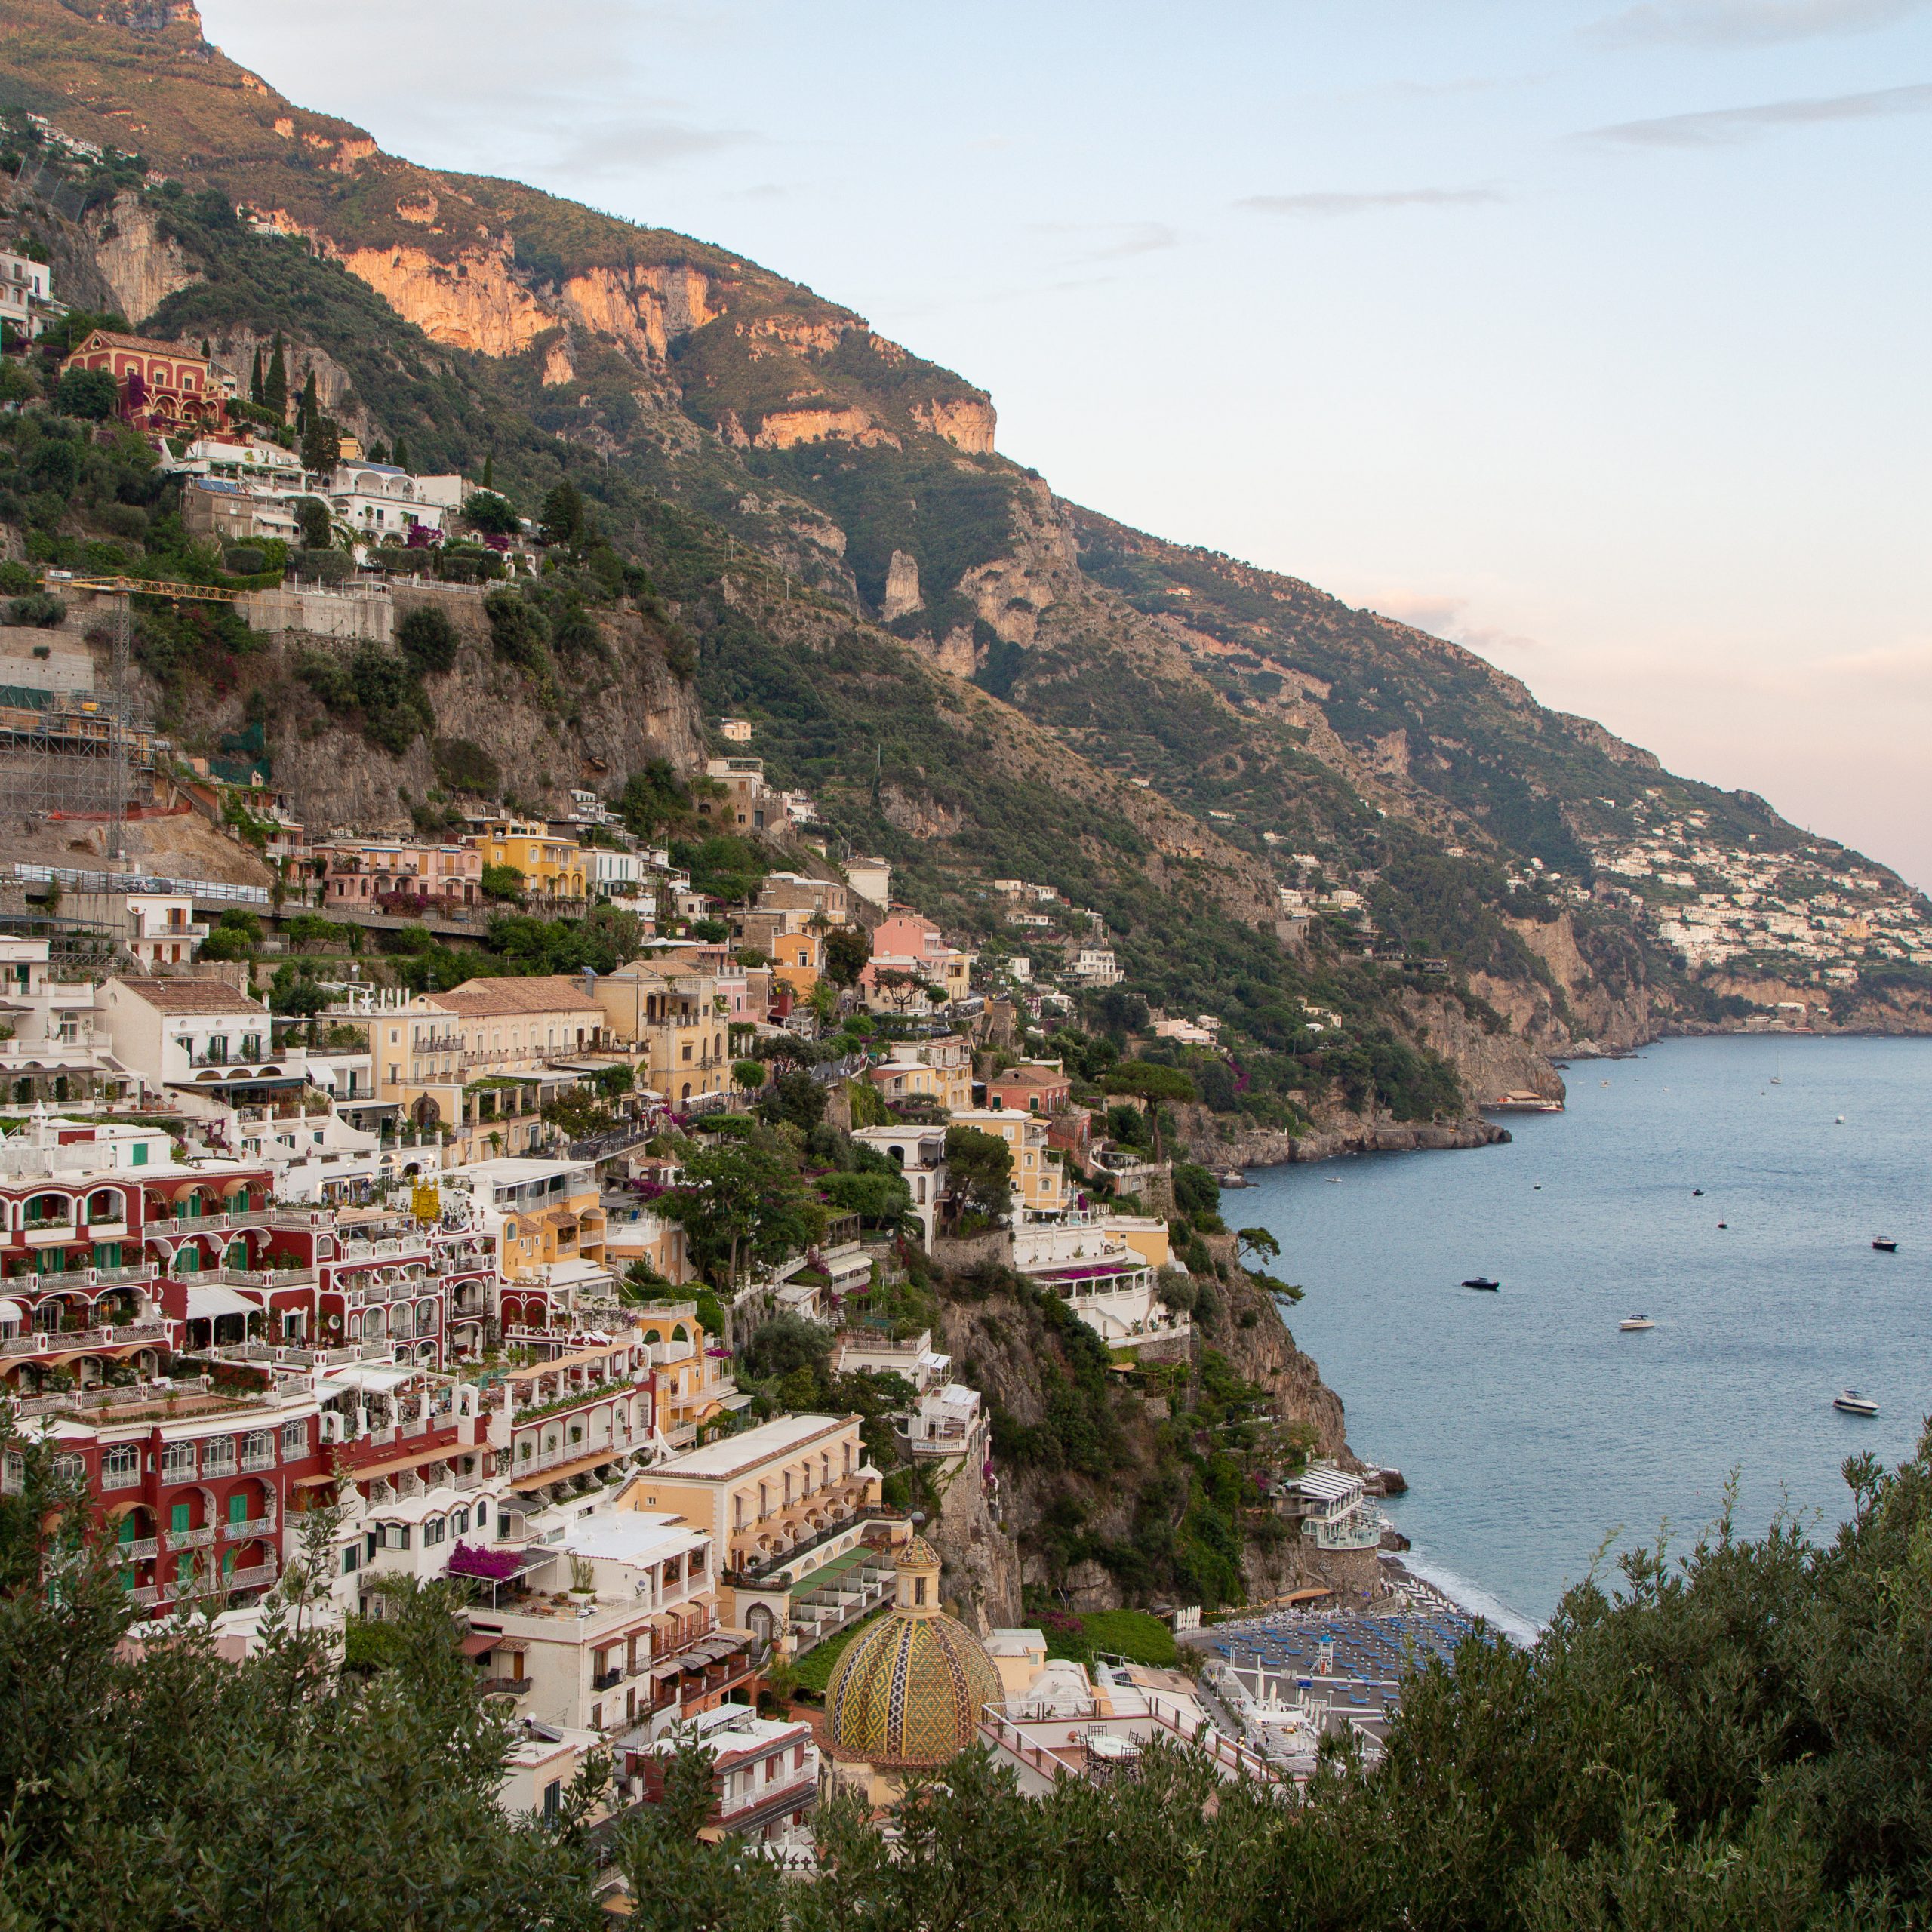 Campania: Amalfi, Positano, Capri, Naples and more